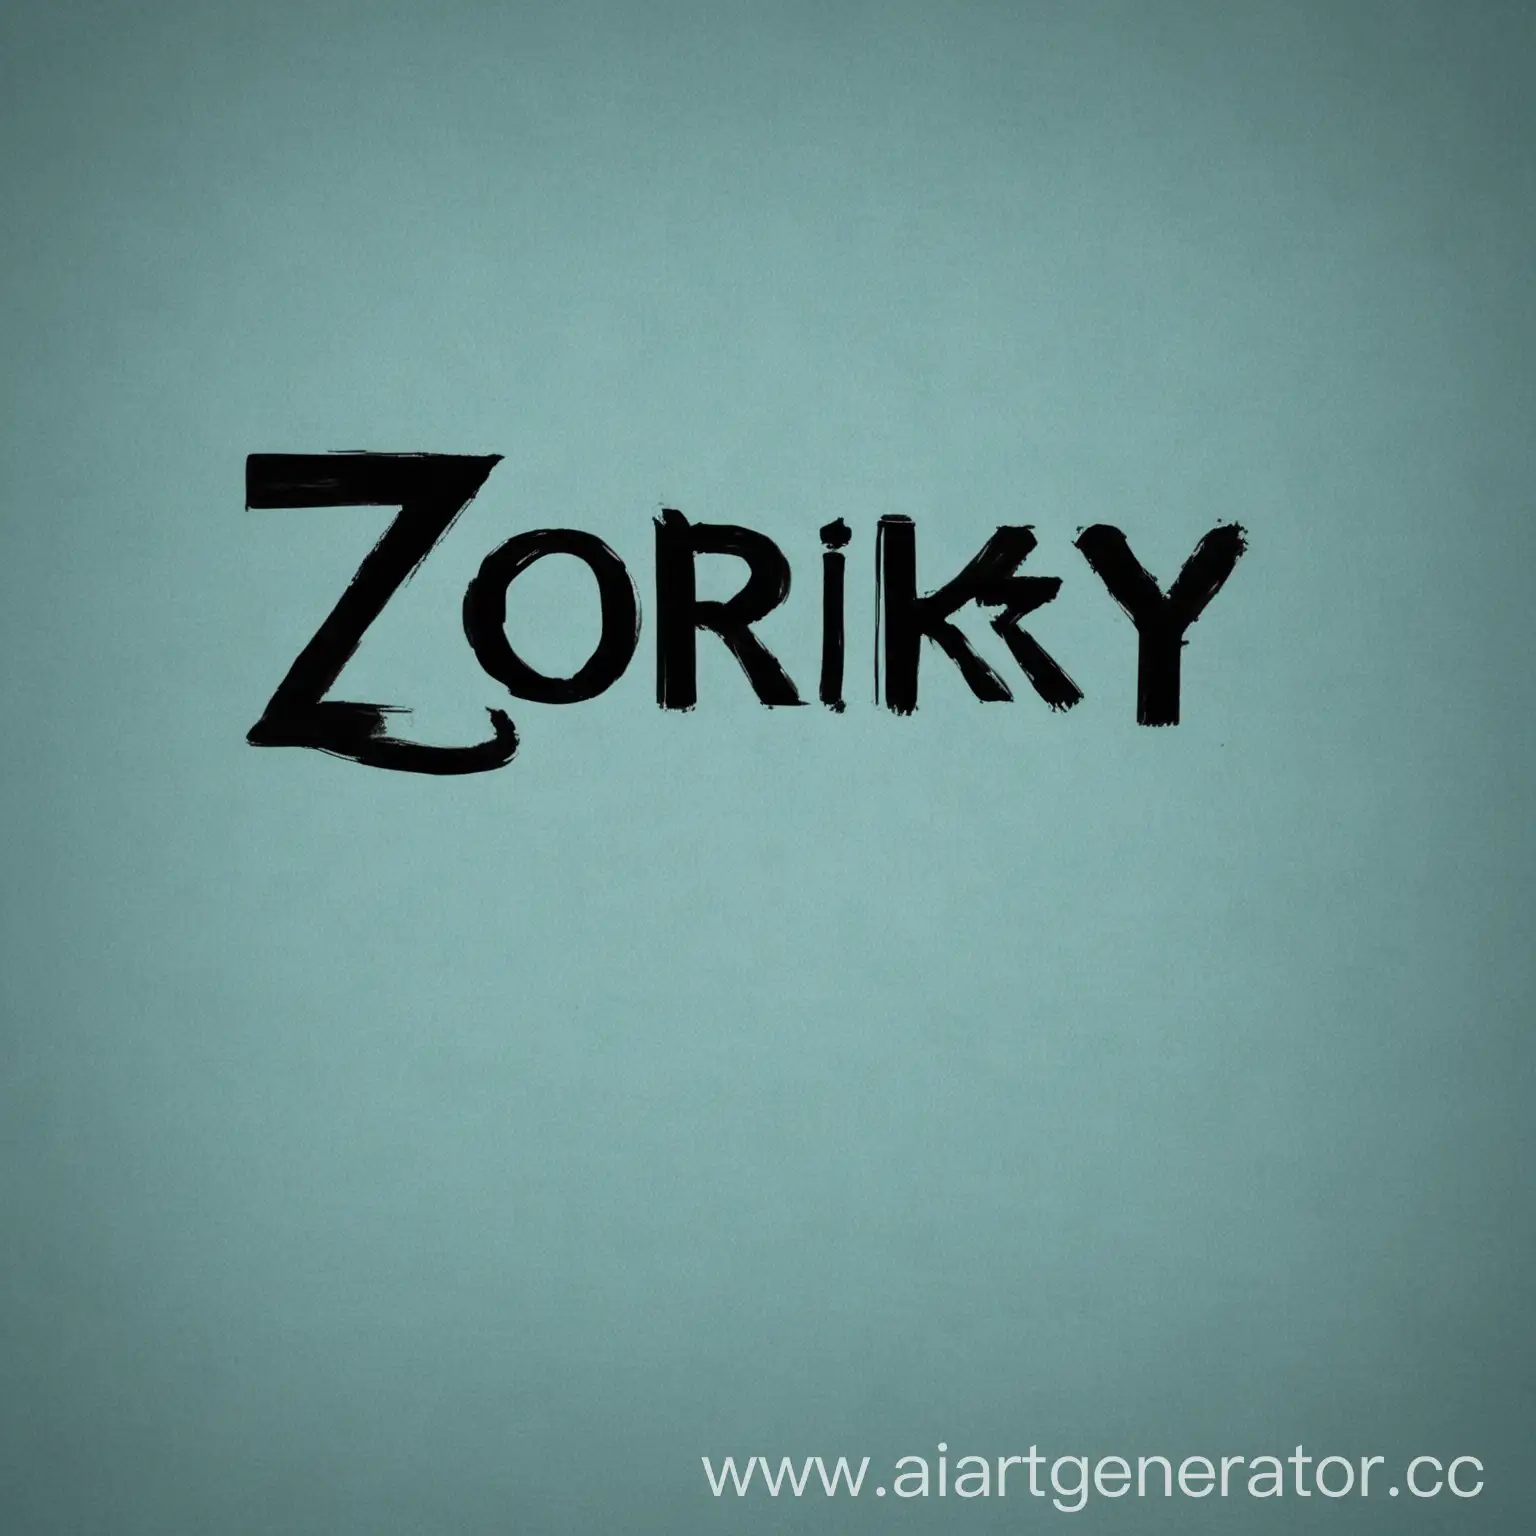 Minimalist-Black-and-Blue-Typography-Artwork-Zorkiy-by-The-Creator